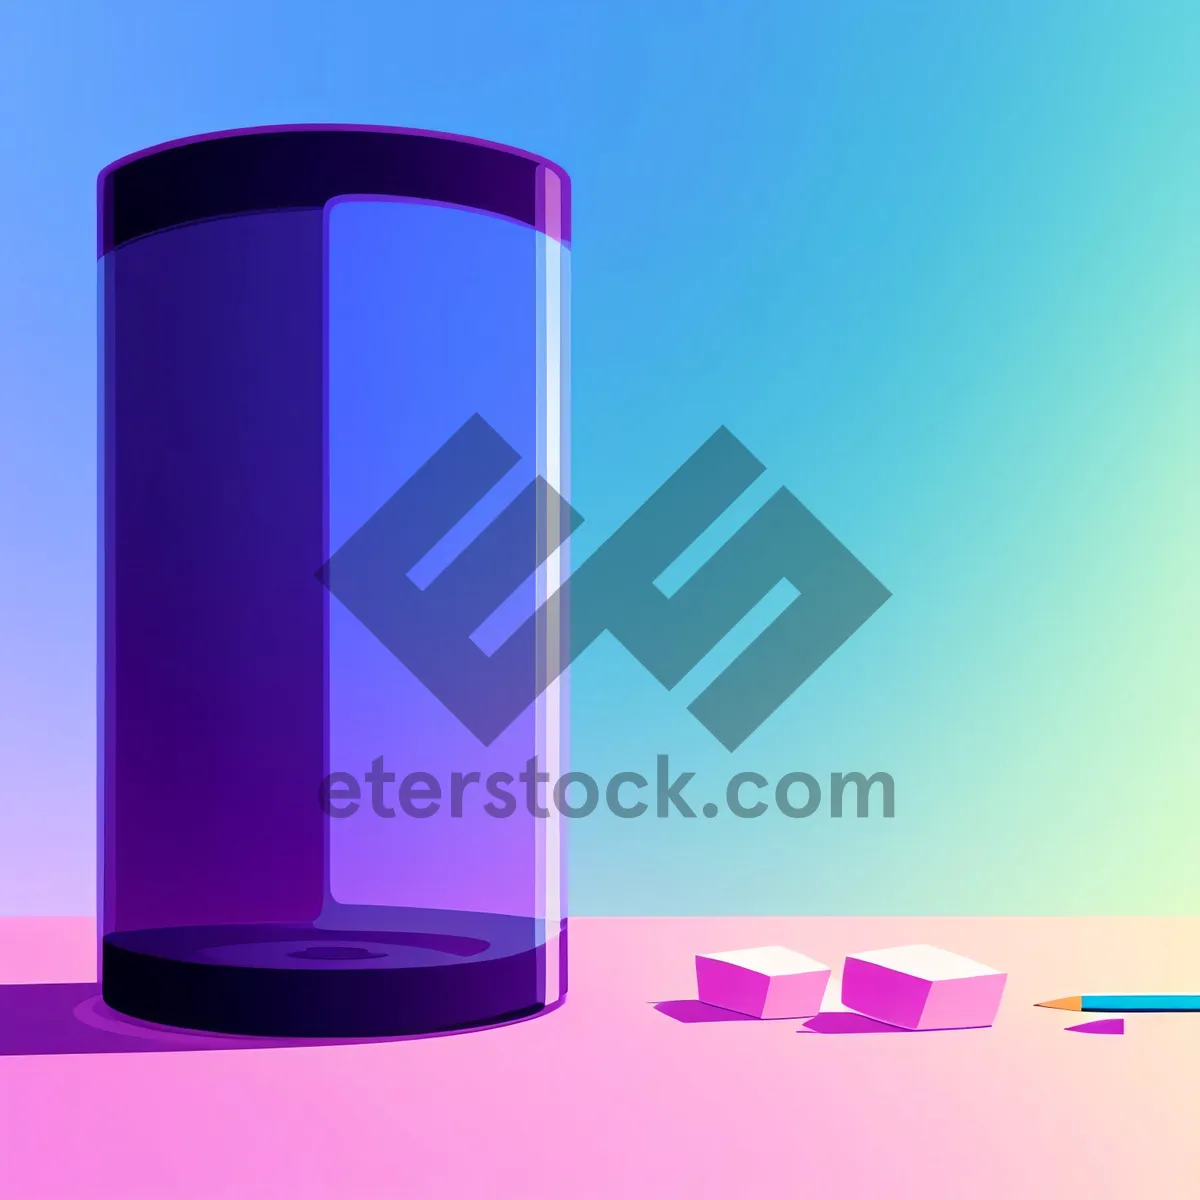 Picture of Container of Liquid Prescription Drug in Glass